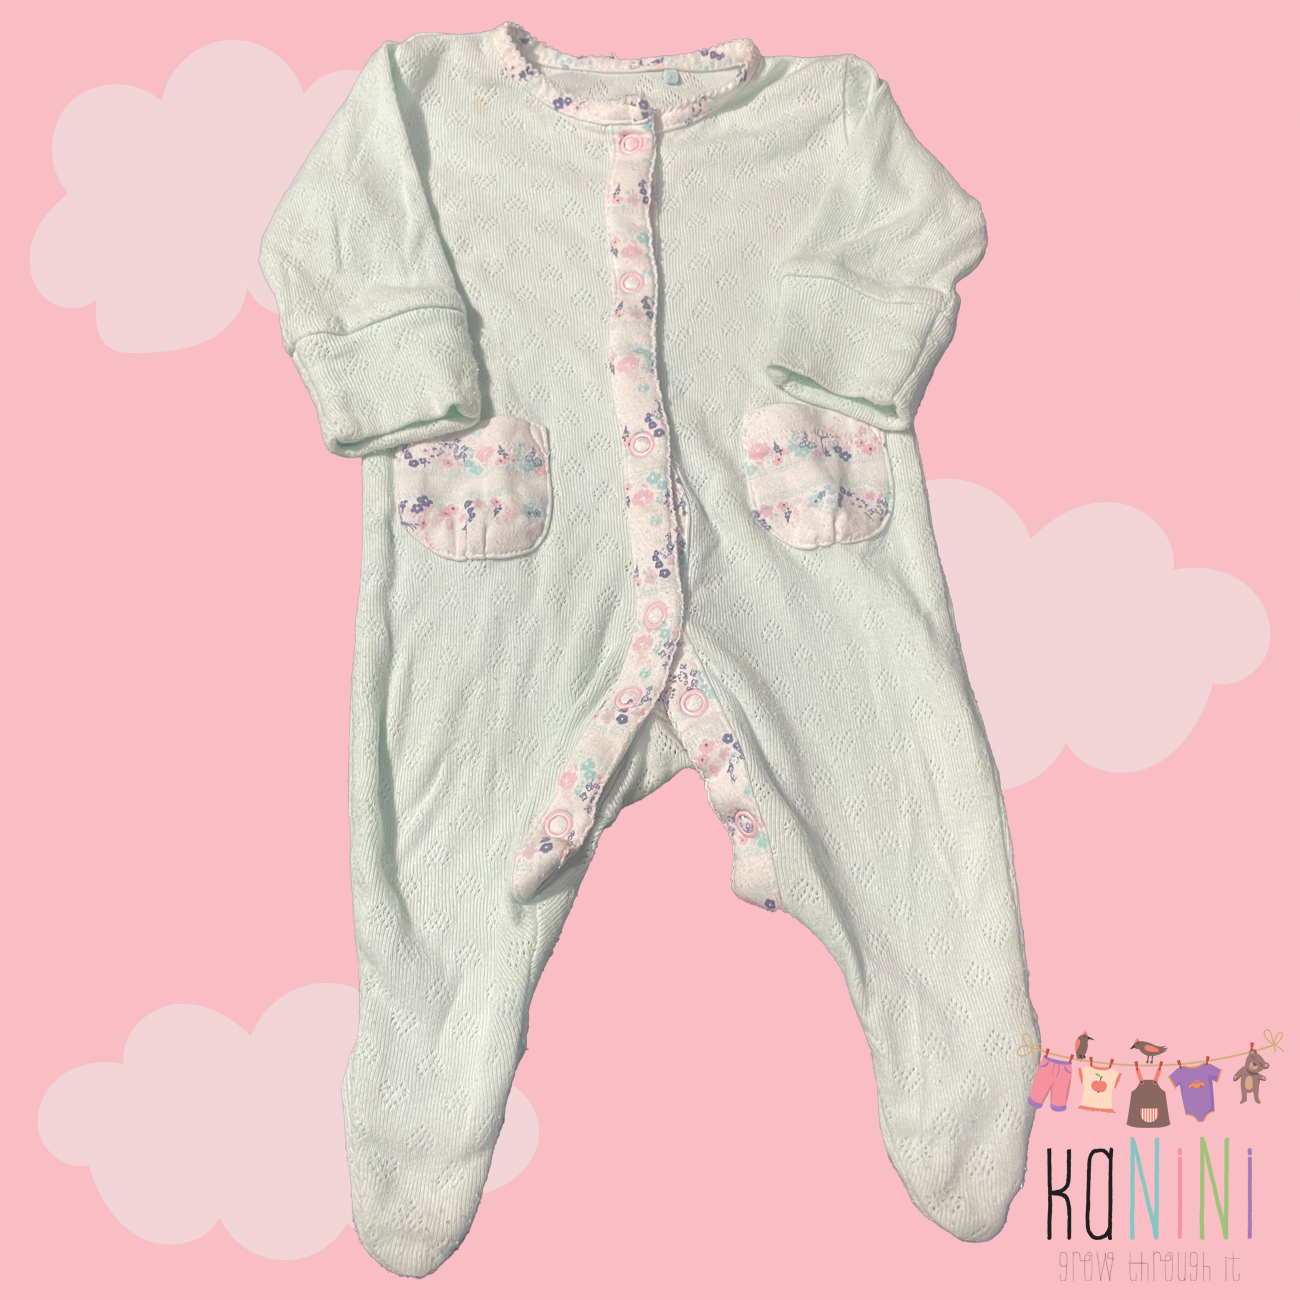 Featured image for “UK Next Newborn Girls Mint Green Babygrow”